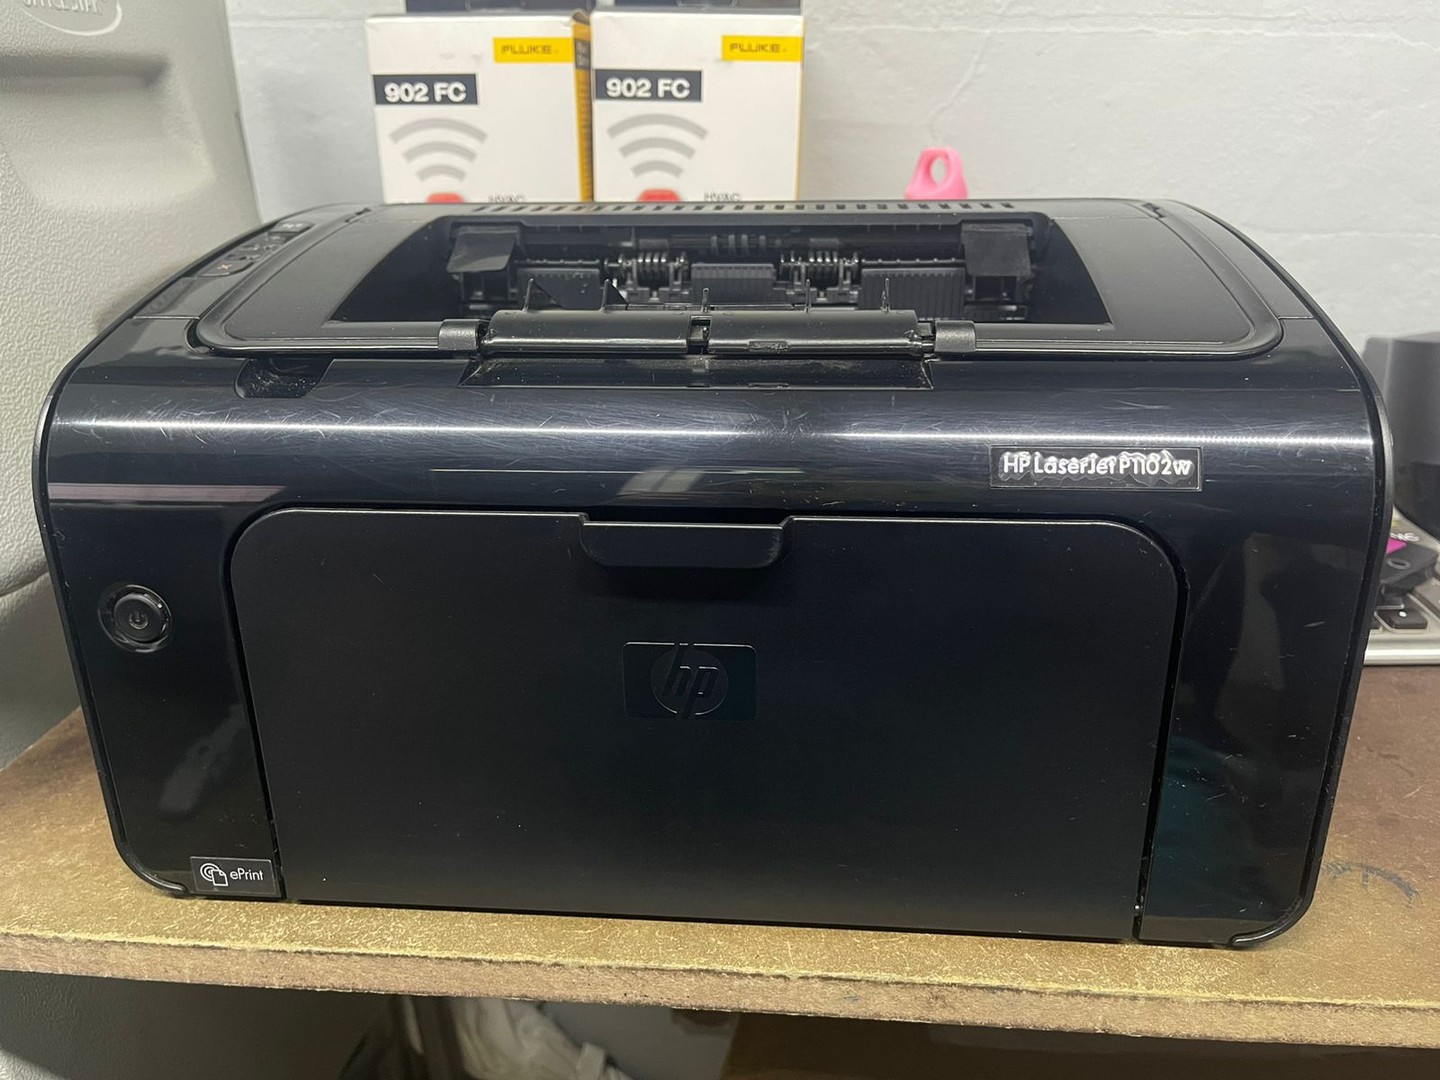 impresoras y scanners - Printer impresora Hp LaserJet P1102w
